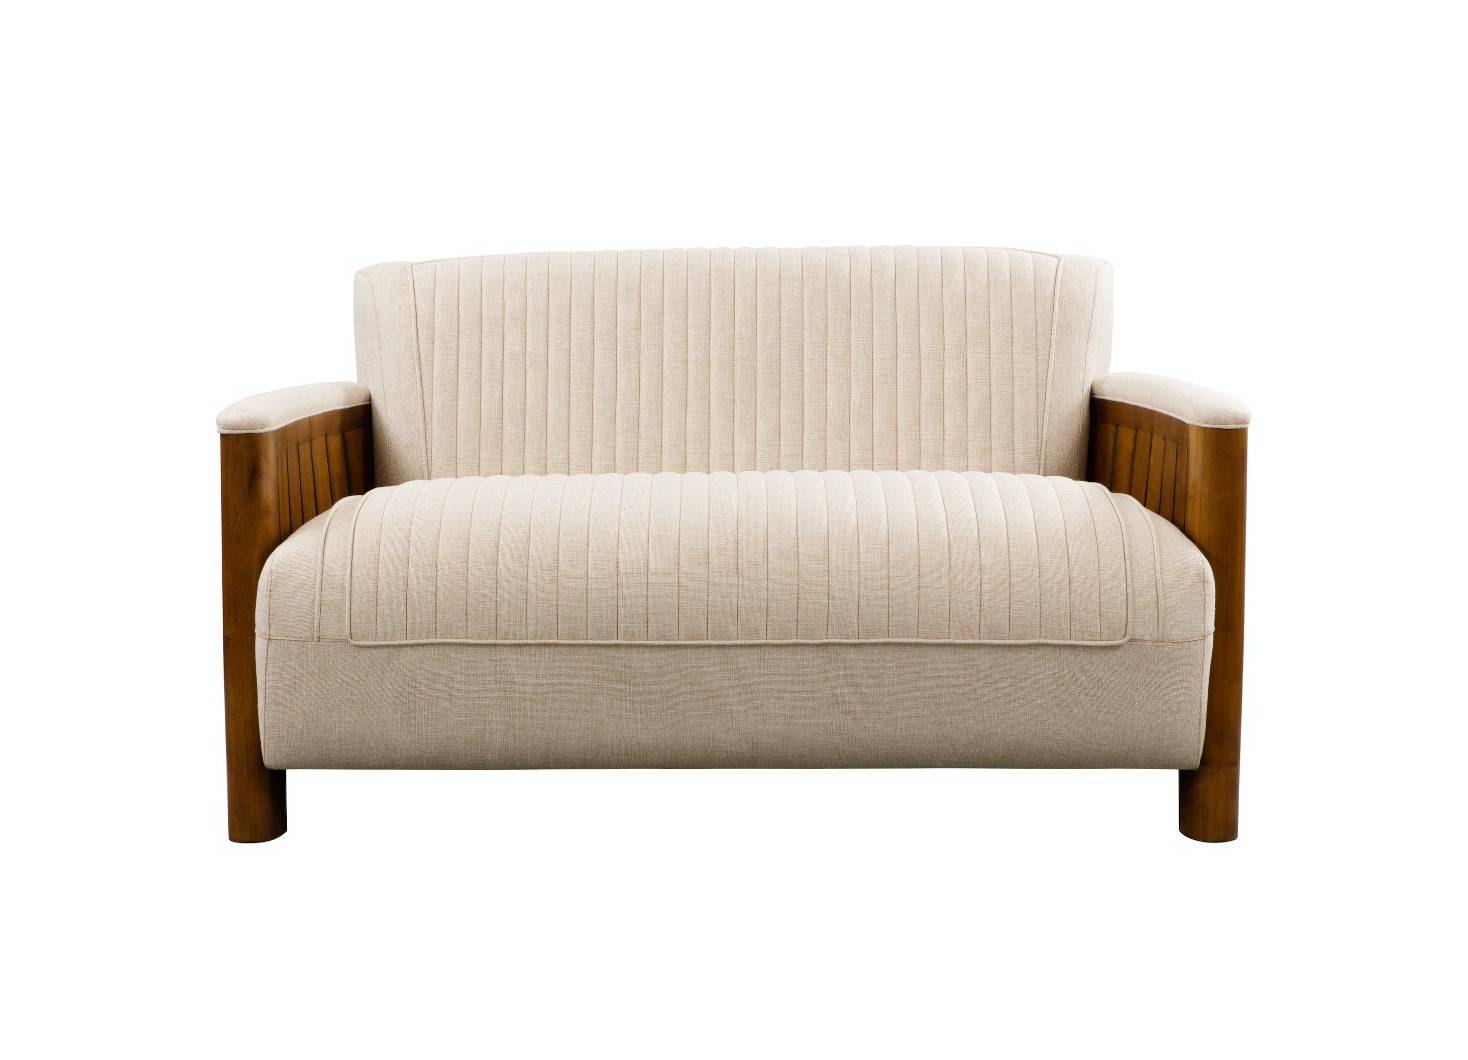 Nuatical style sofa - beige fabric and wood